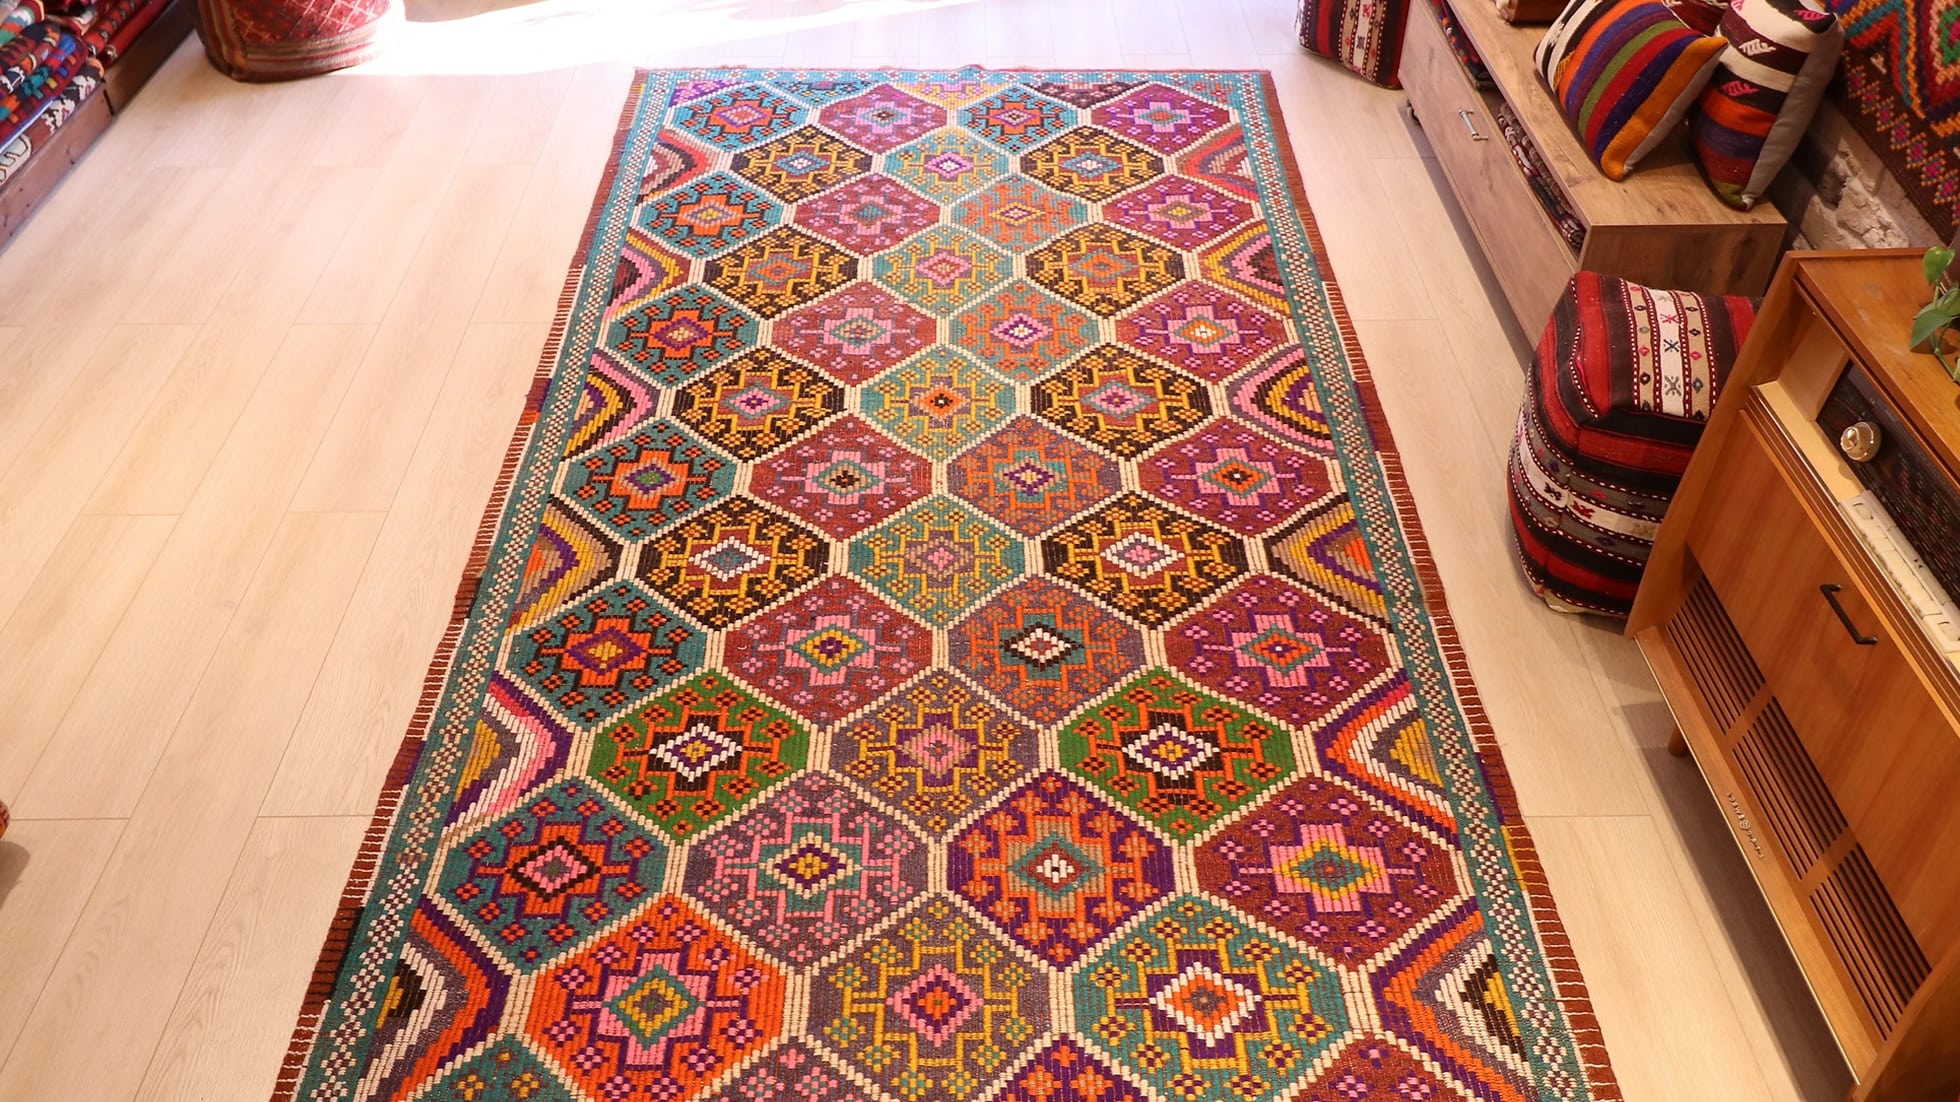 Vintage handwoven flat weave luxury Cecim Kilim Rug in vibrant and vivid colors